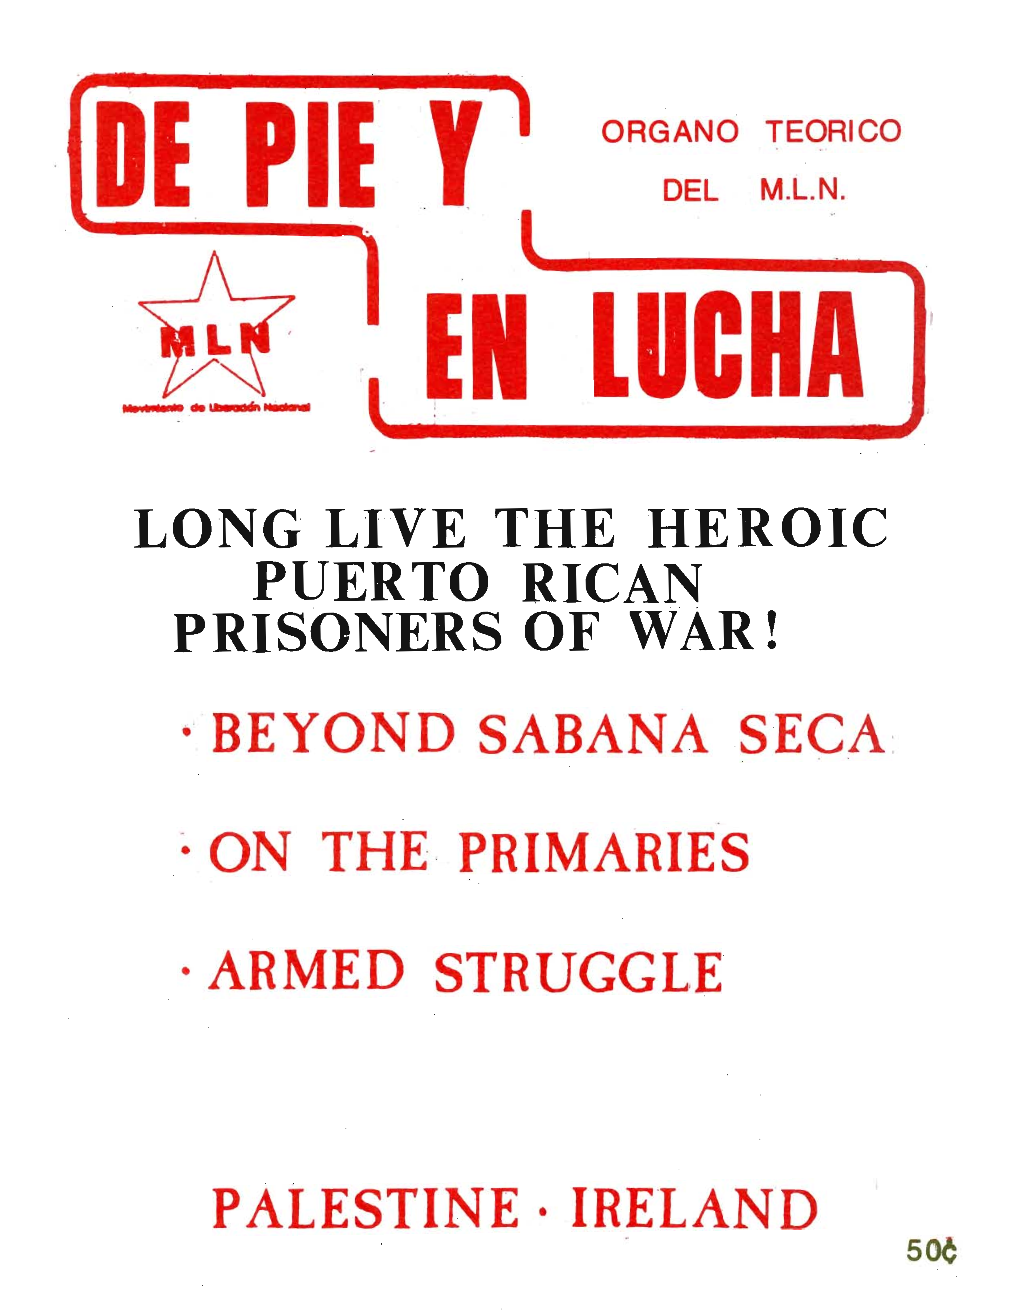 De Pie Y En Lucha LONG LIVE the HEROIC PRISONERS of WAR! on April 4, 1980, Police in Evanston, 111